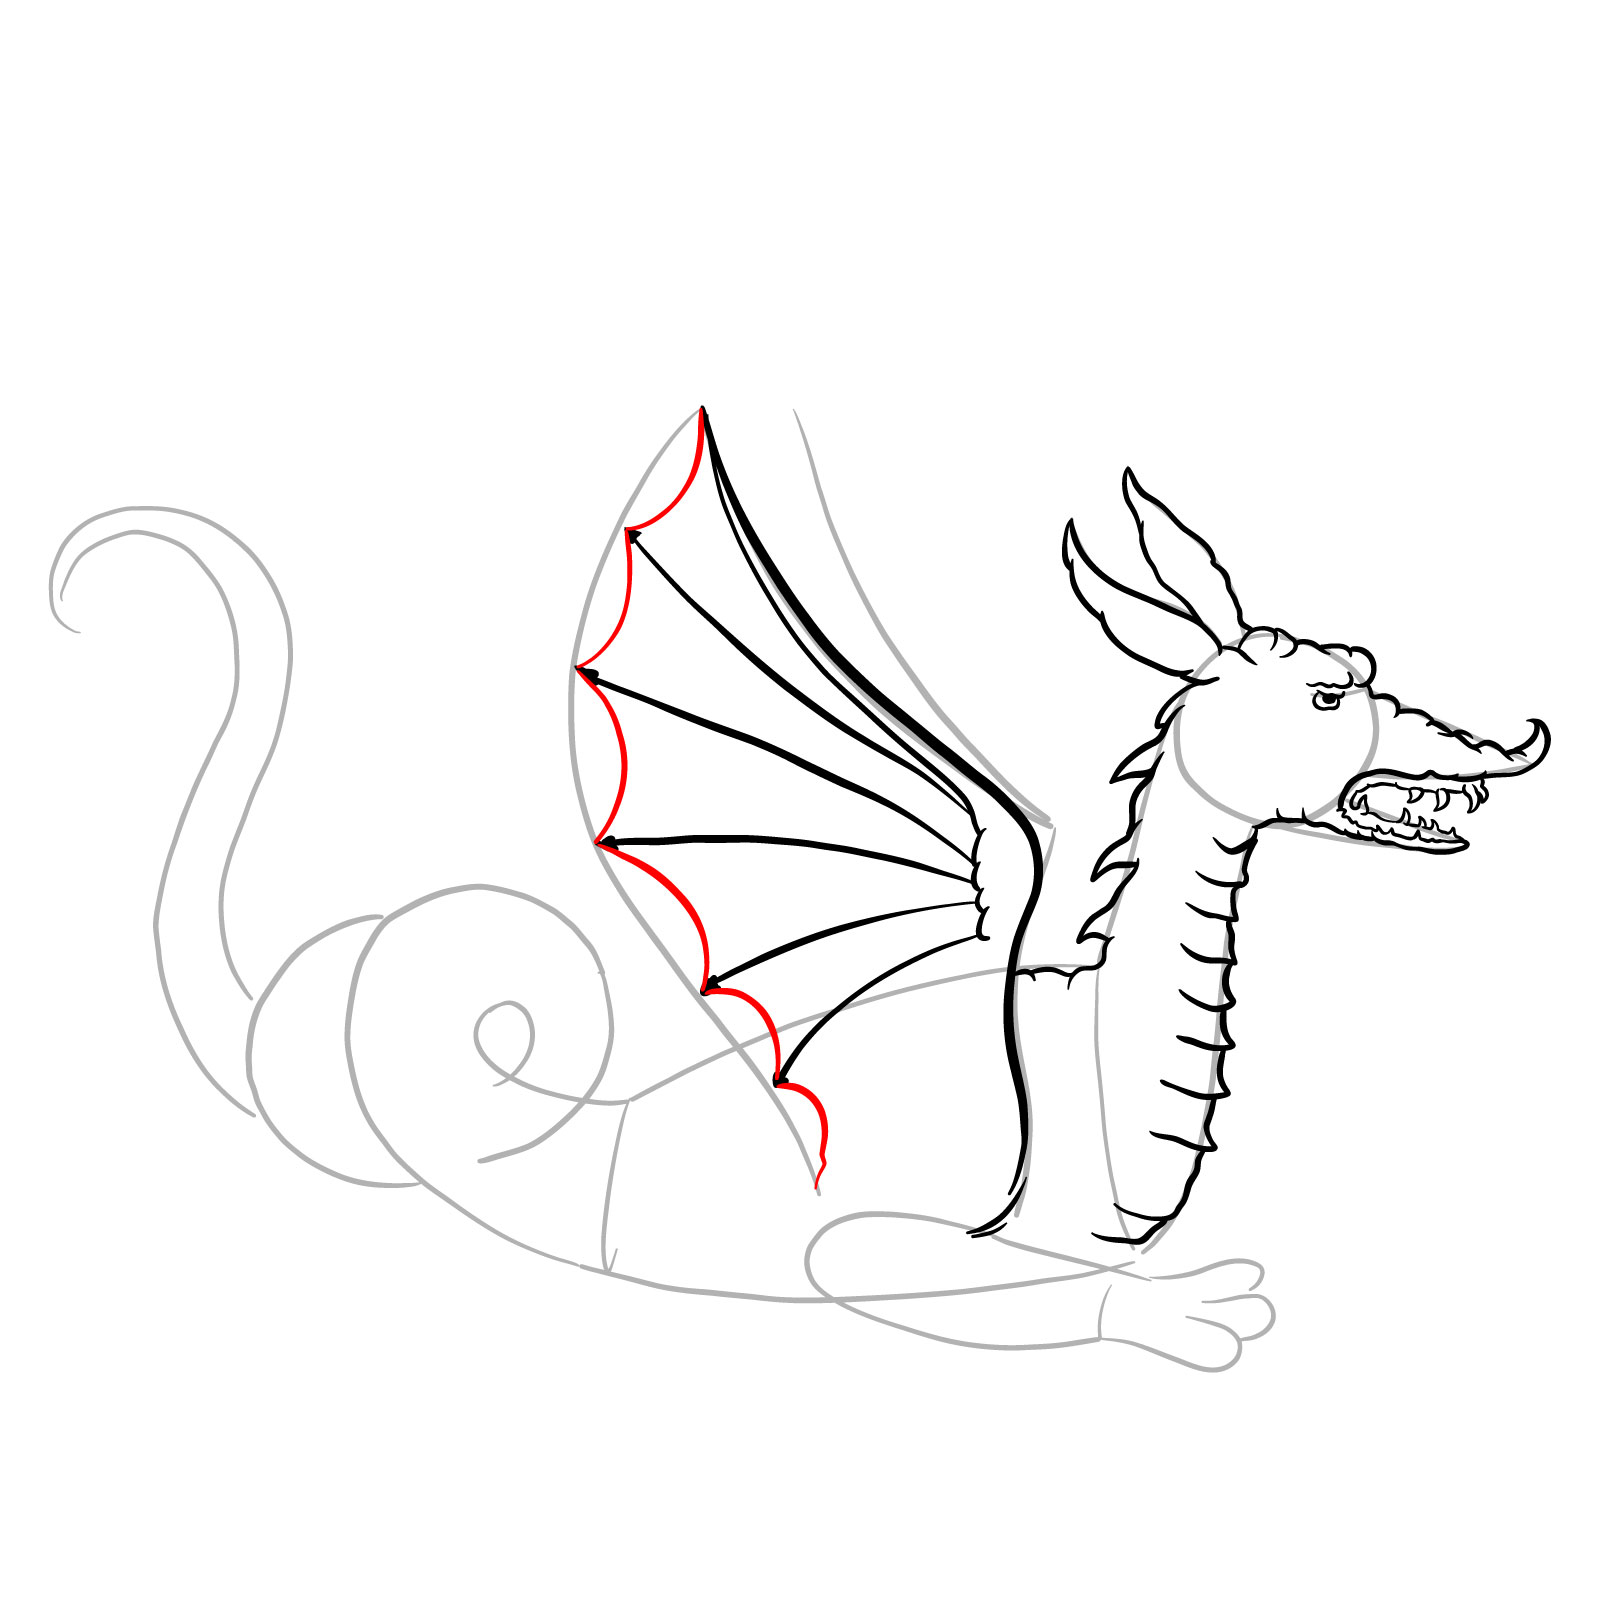 How to draw a Knucker dragon - step 15